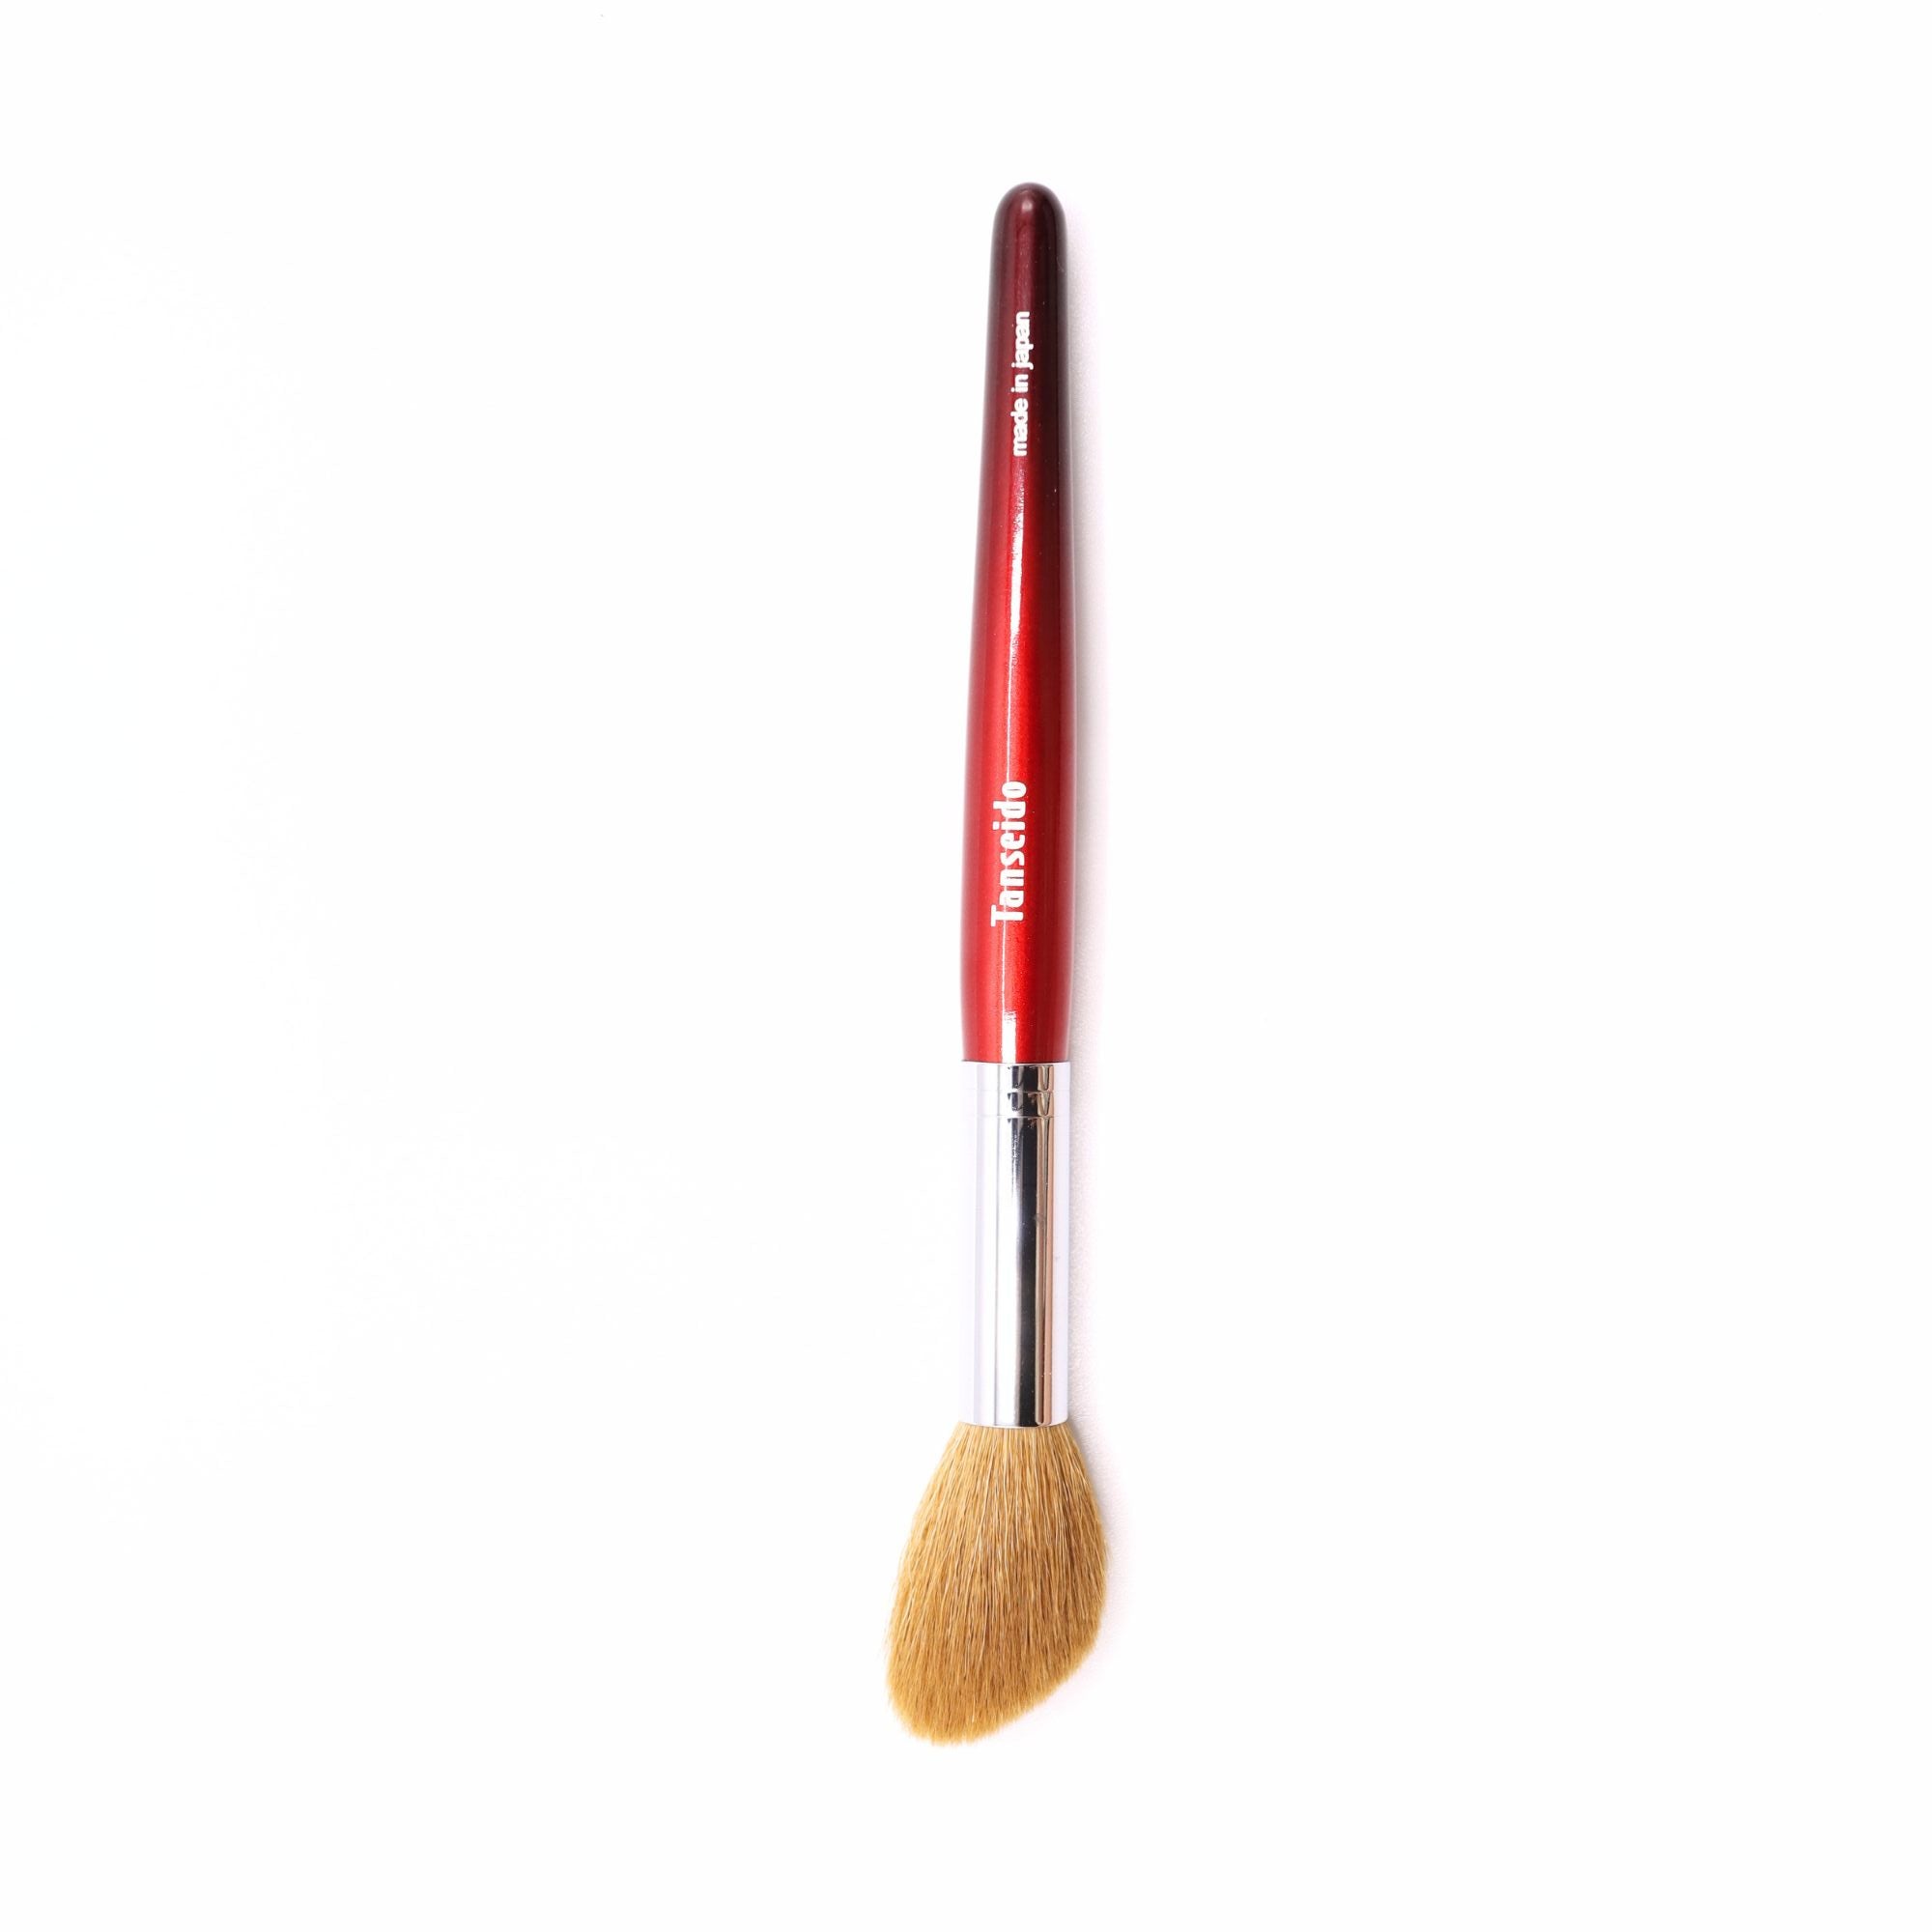 Tanseido AKA 赤 Series 3-Brush Set (Regular Collection) - Fude Beauty, Japanese Makeup Brushes